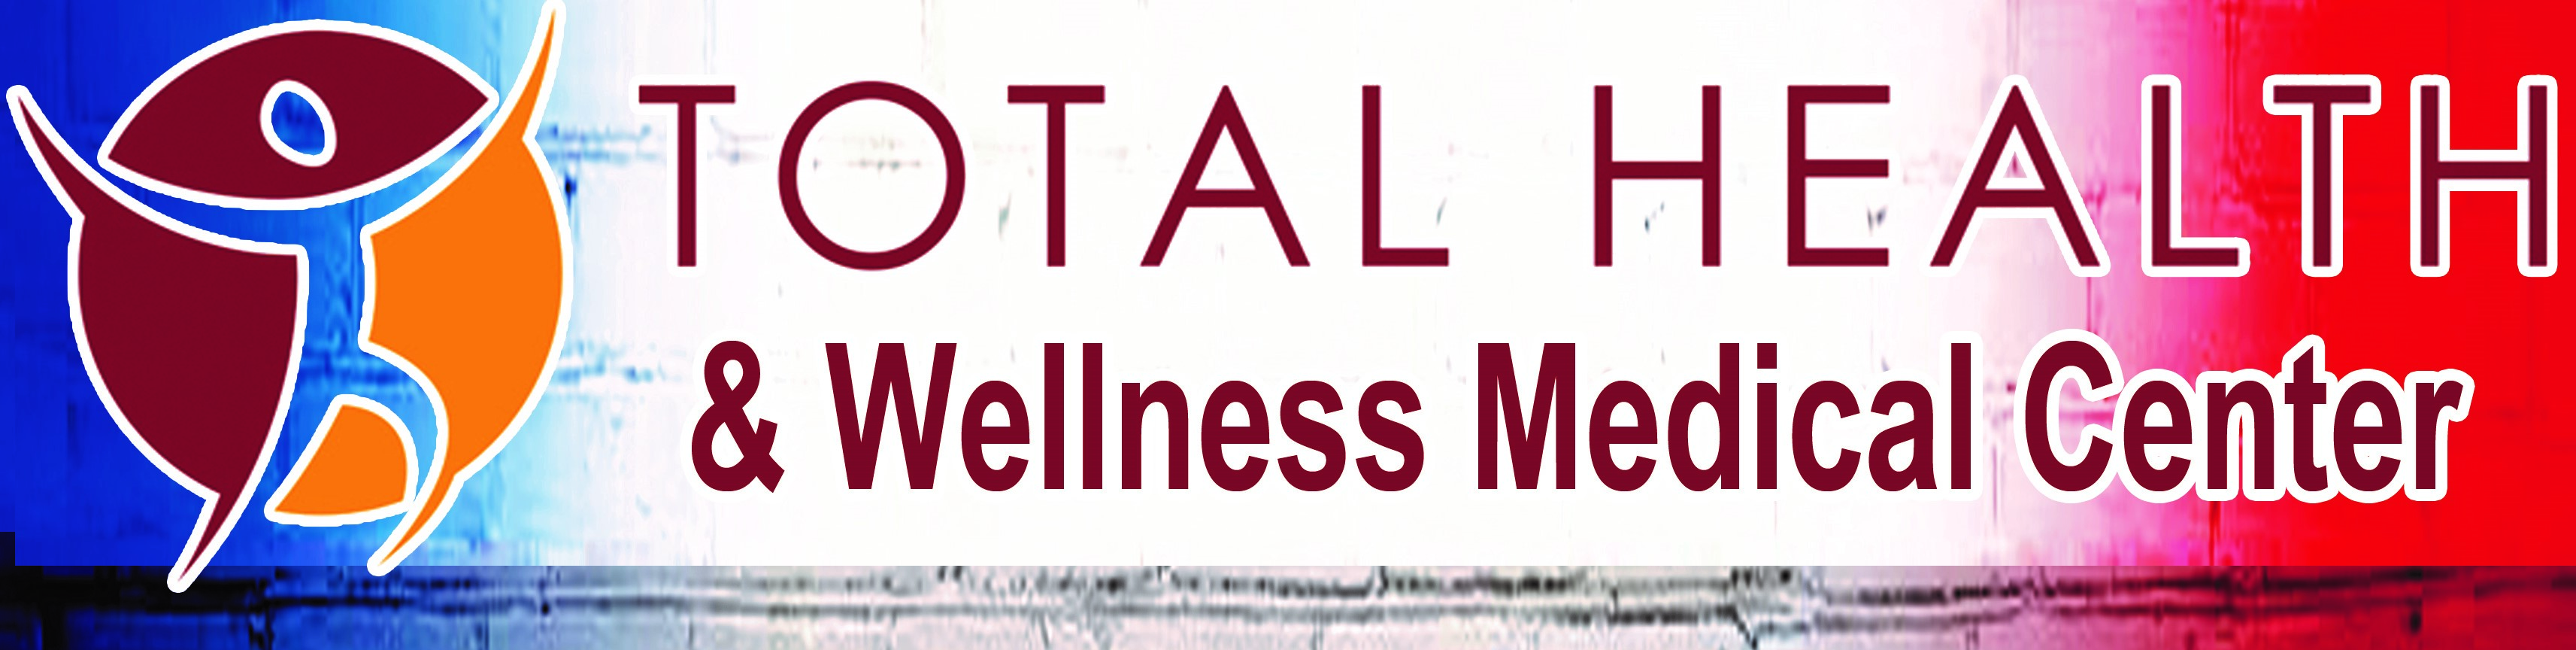 Total Health & Wellness Medical Center's Logo